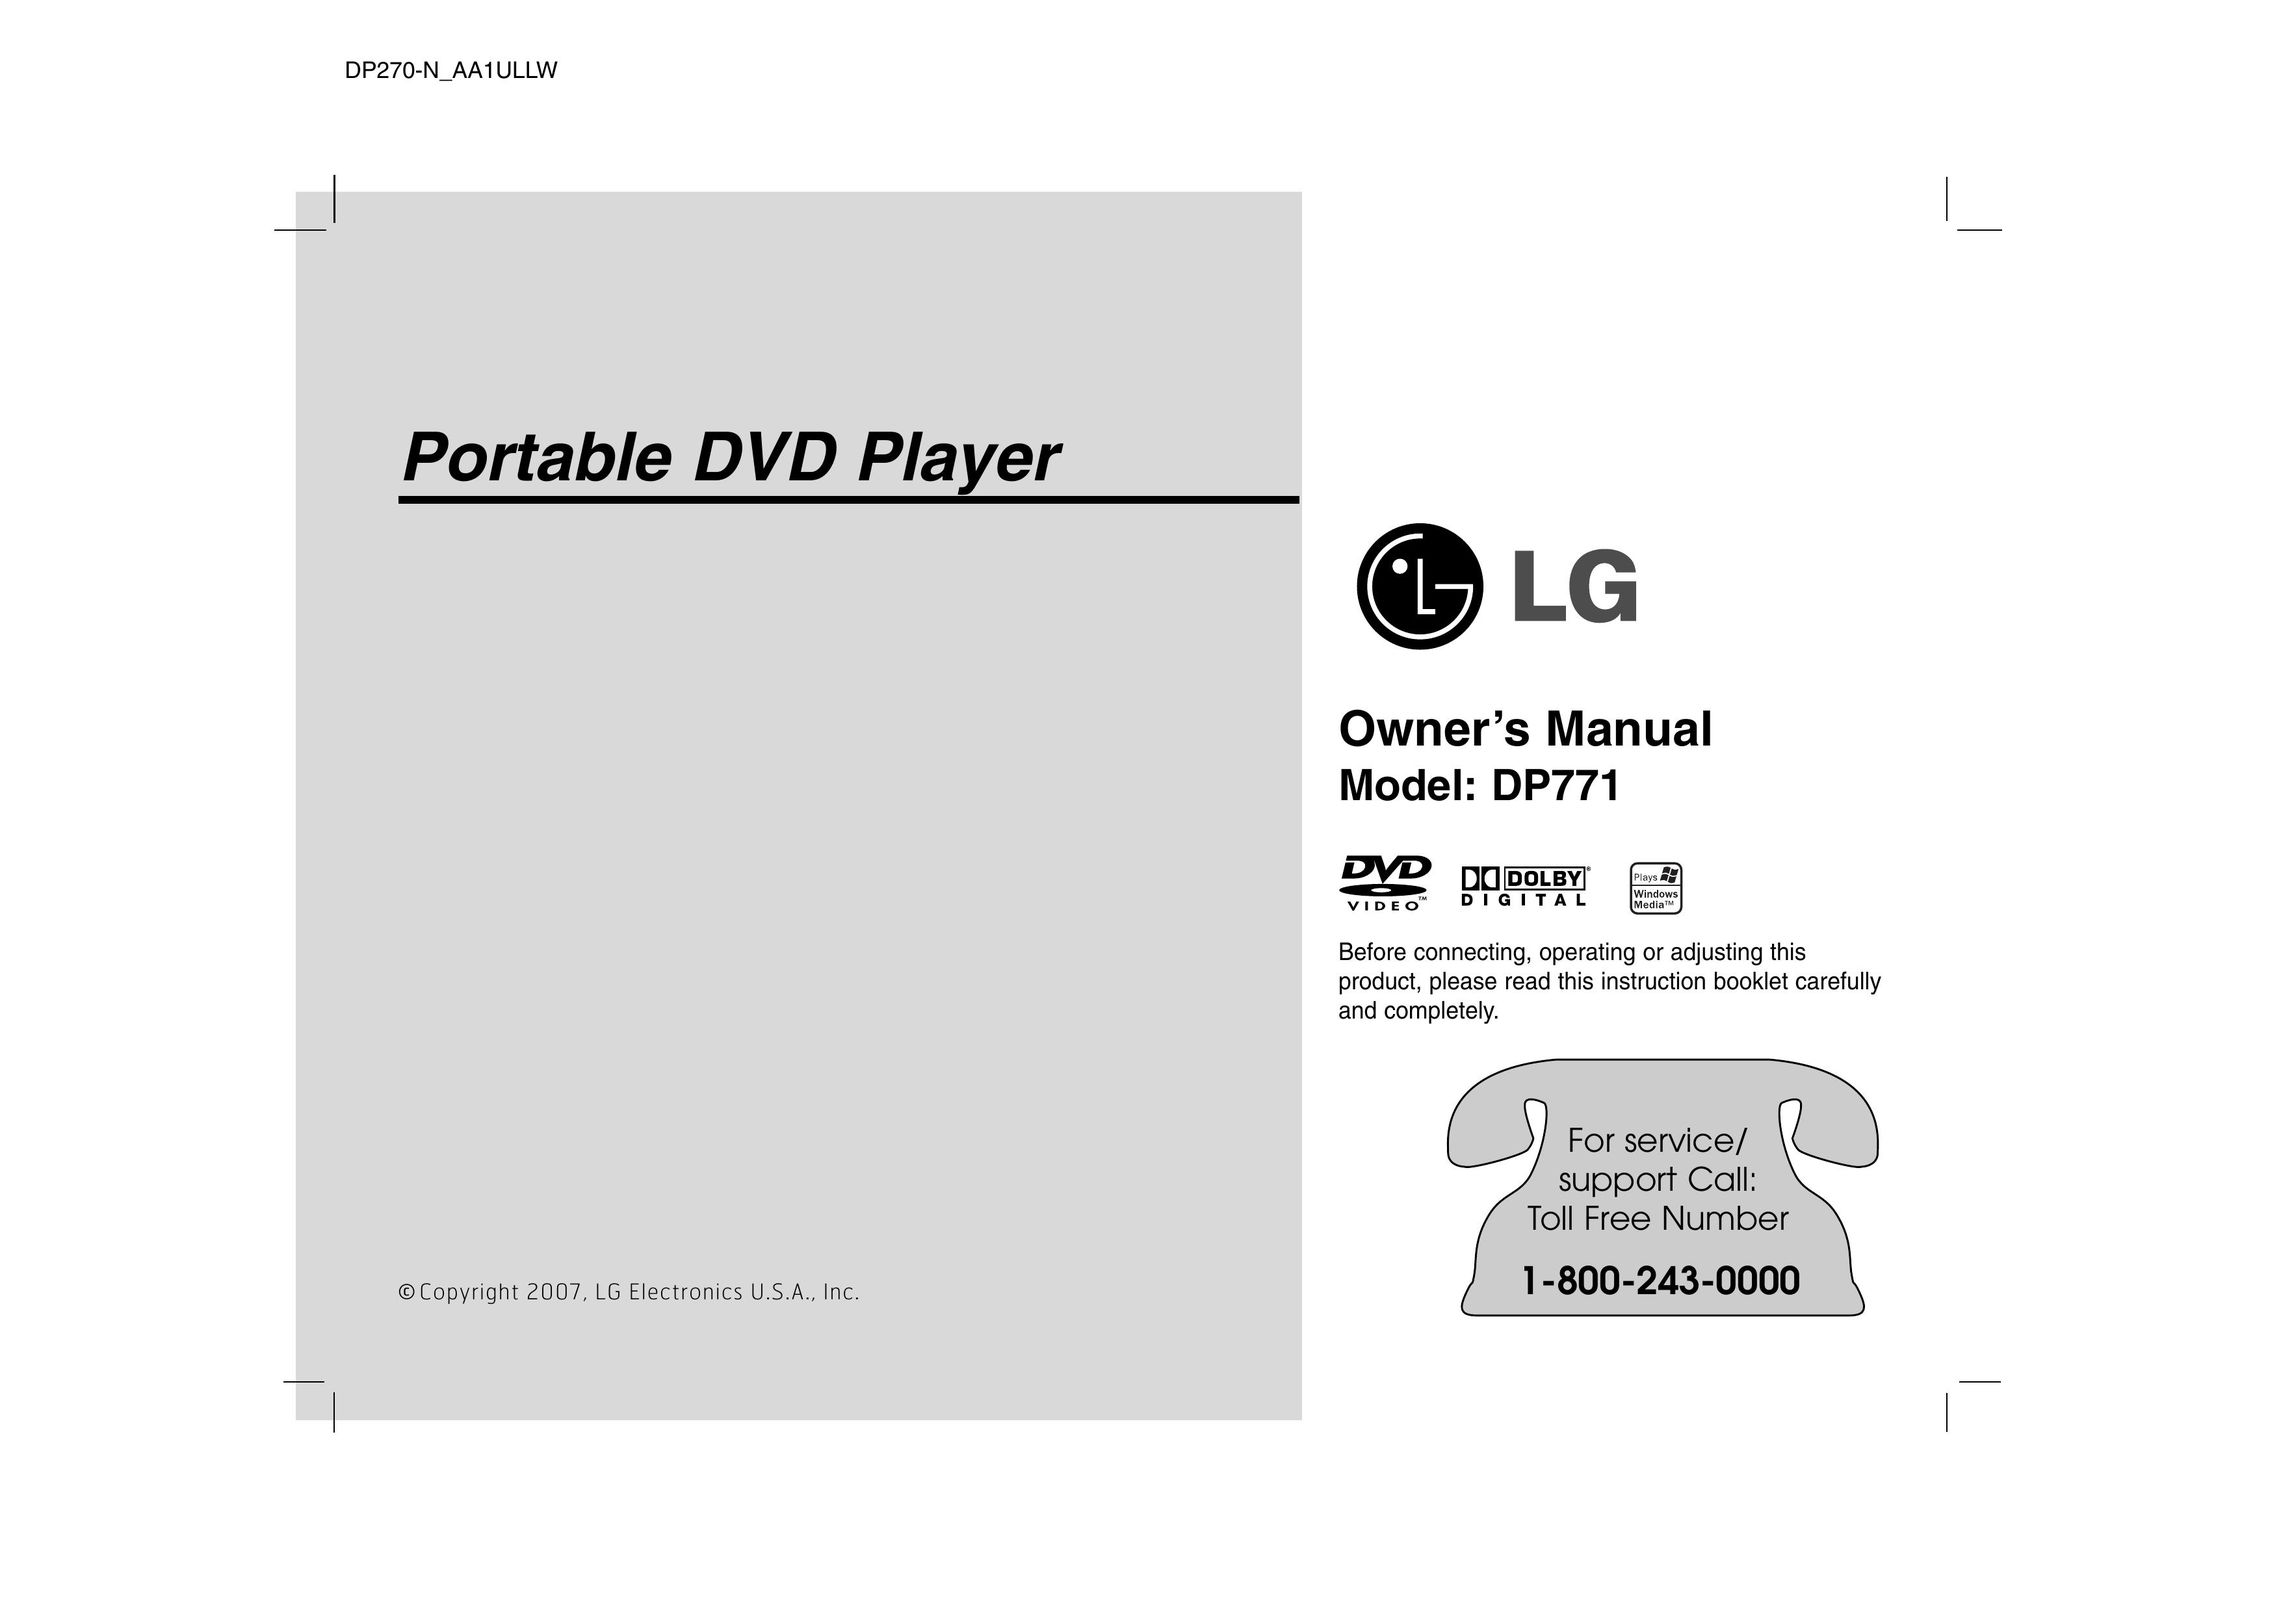 Mitel DP771 Portable DVD Player User Manual